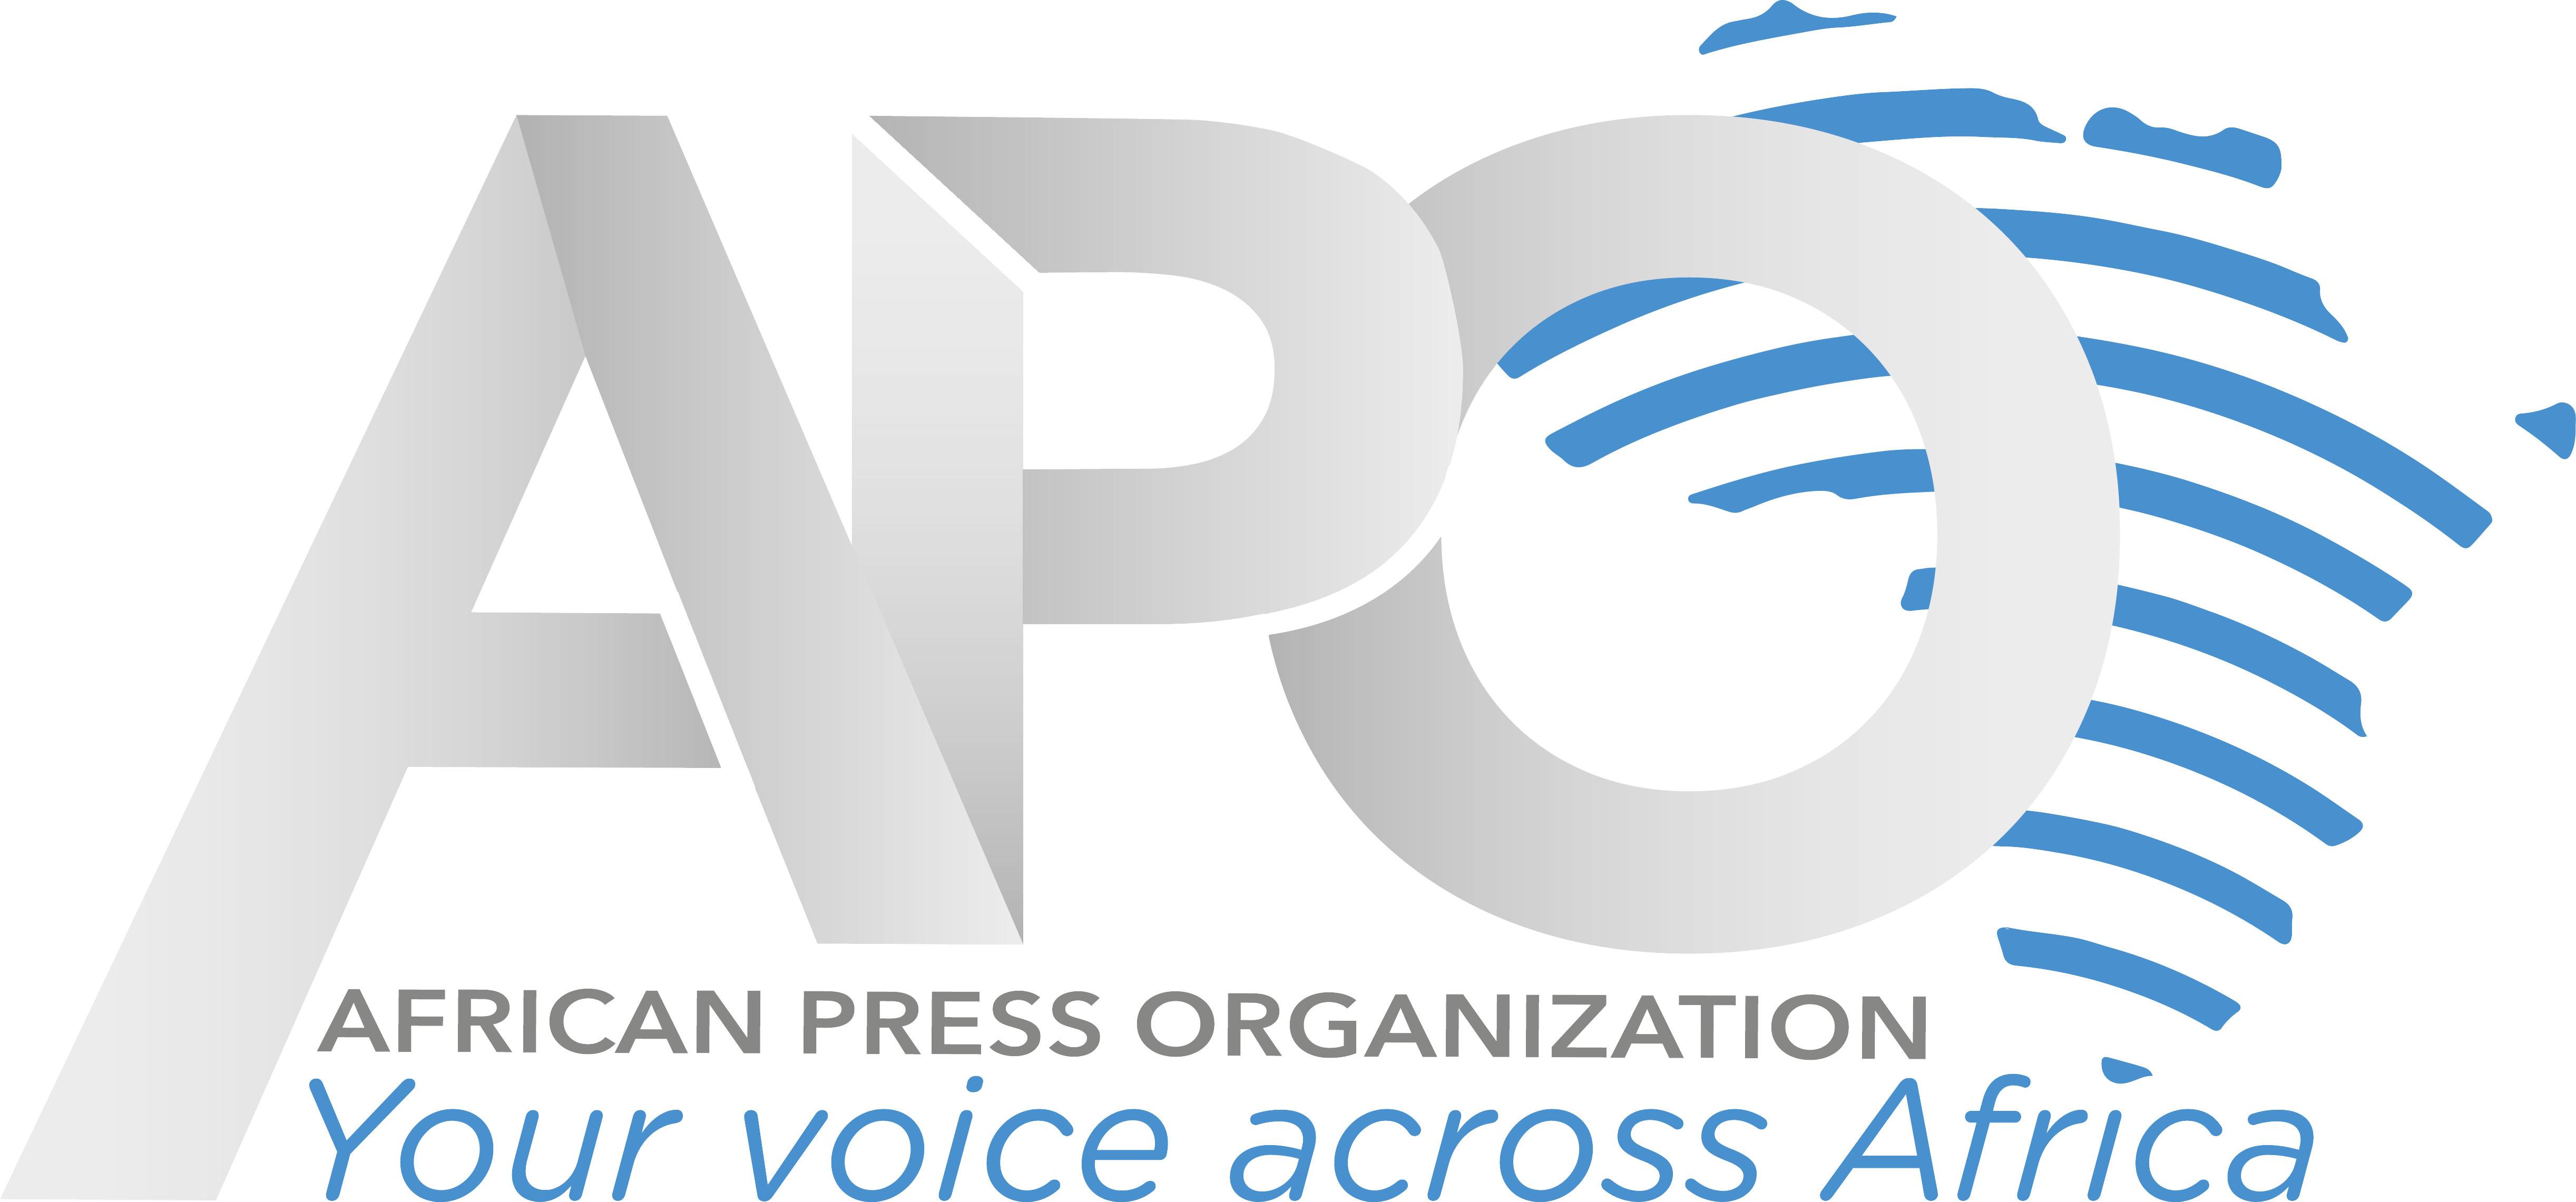 APO (African Press Organization) logo